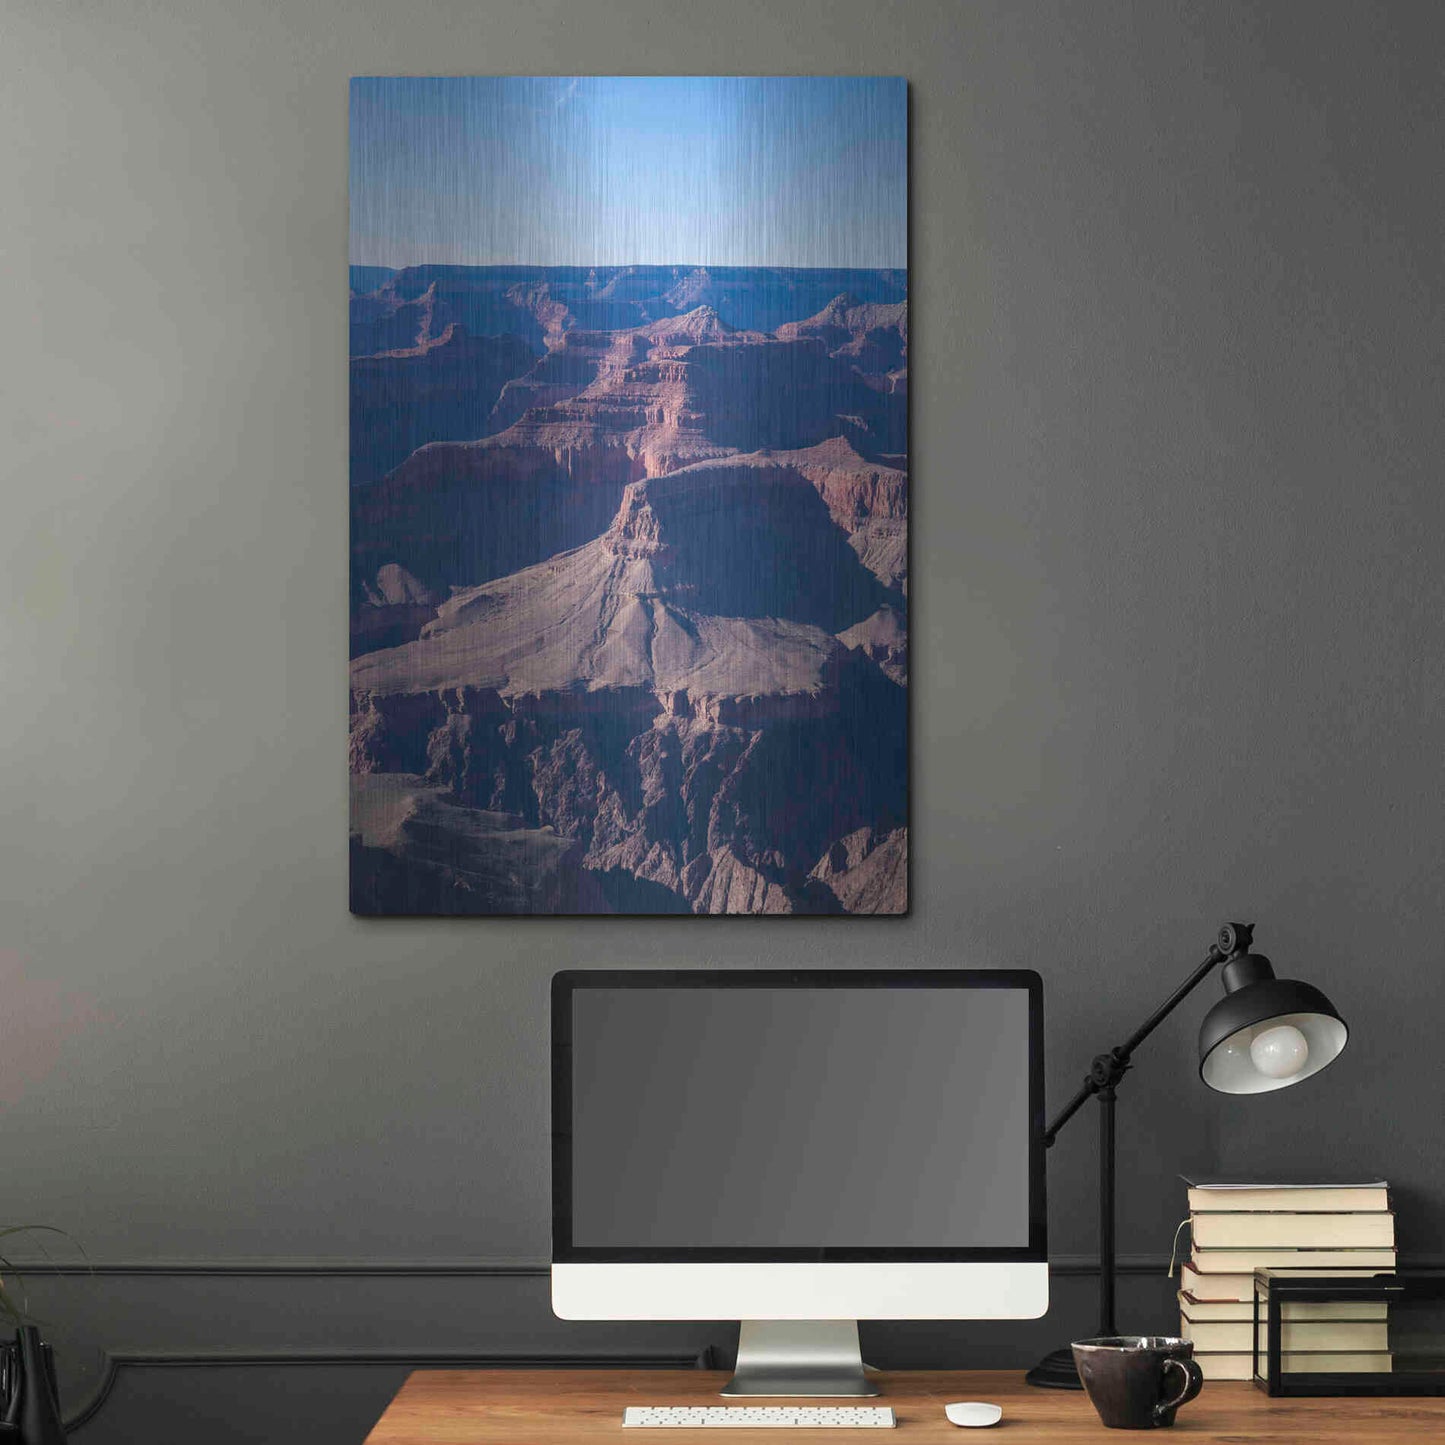 Luxe Metal Art ' Grand Canyon II' by Robin Vandenabeele, Metal Wall Art,24x36